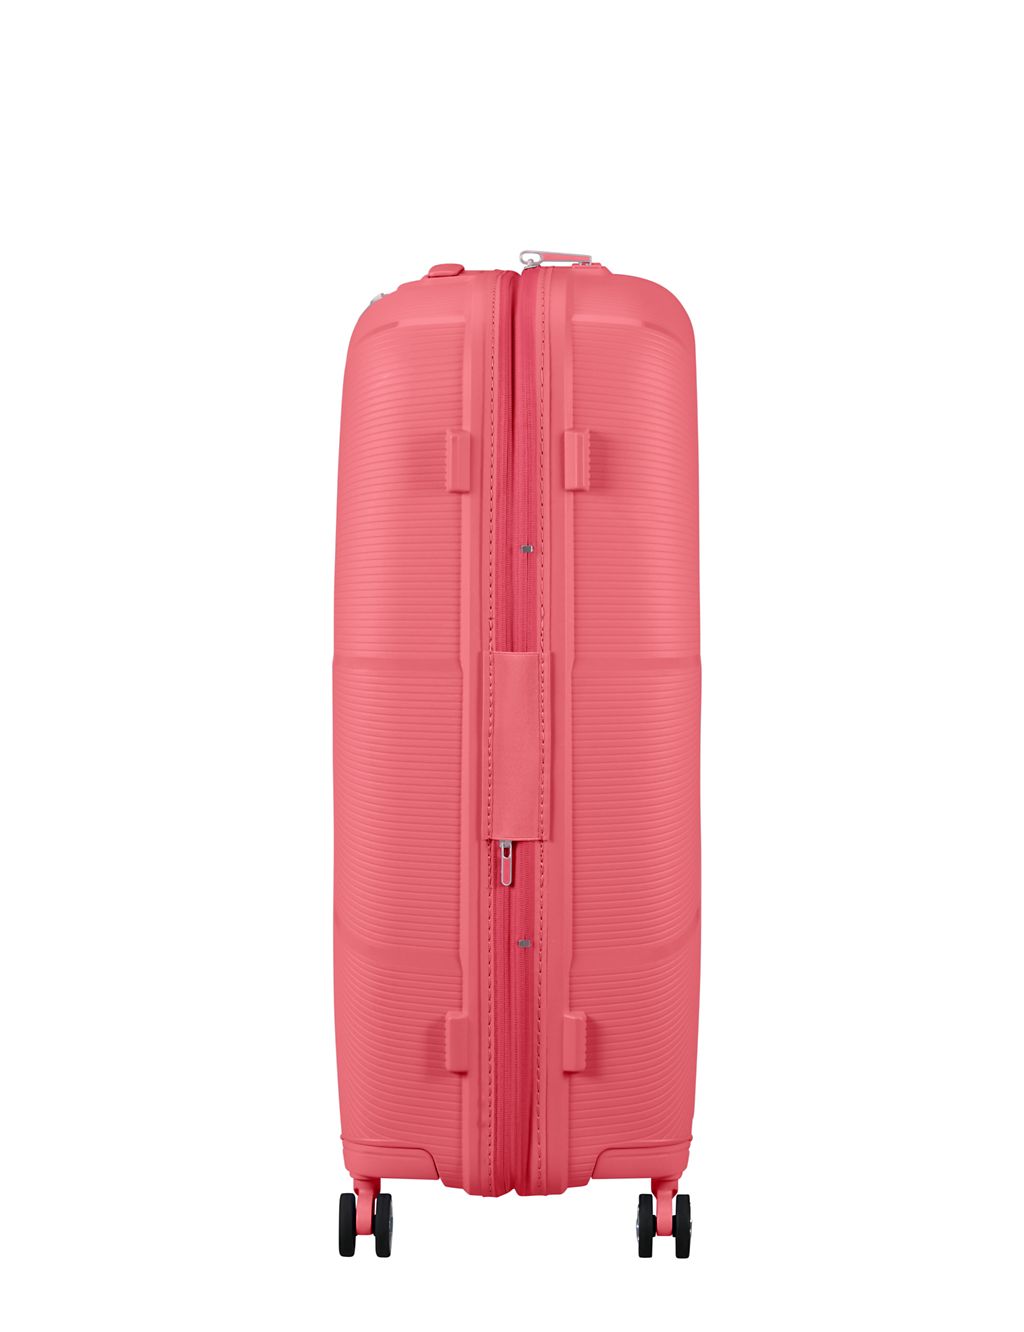 Starvibe 4 Wheel Hard Shell Large Suitcase 4 of 9